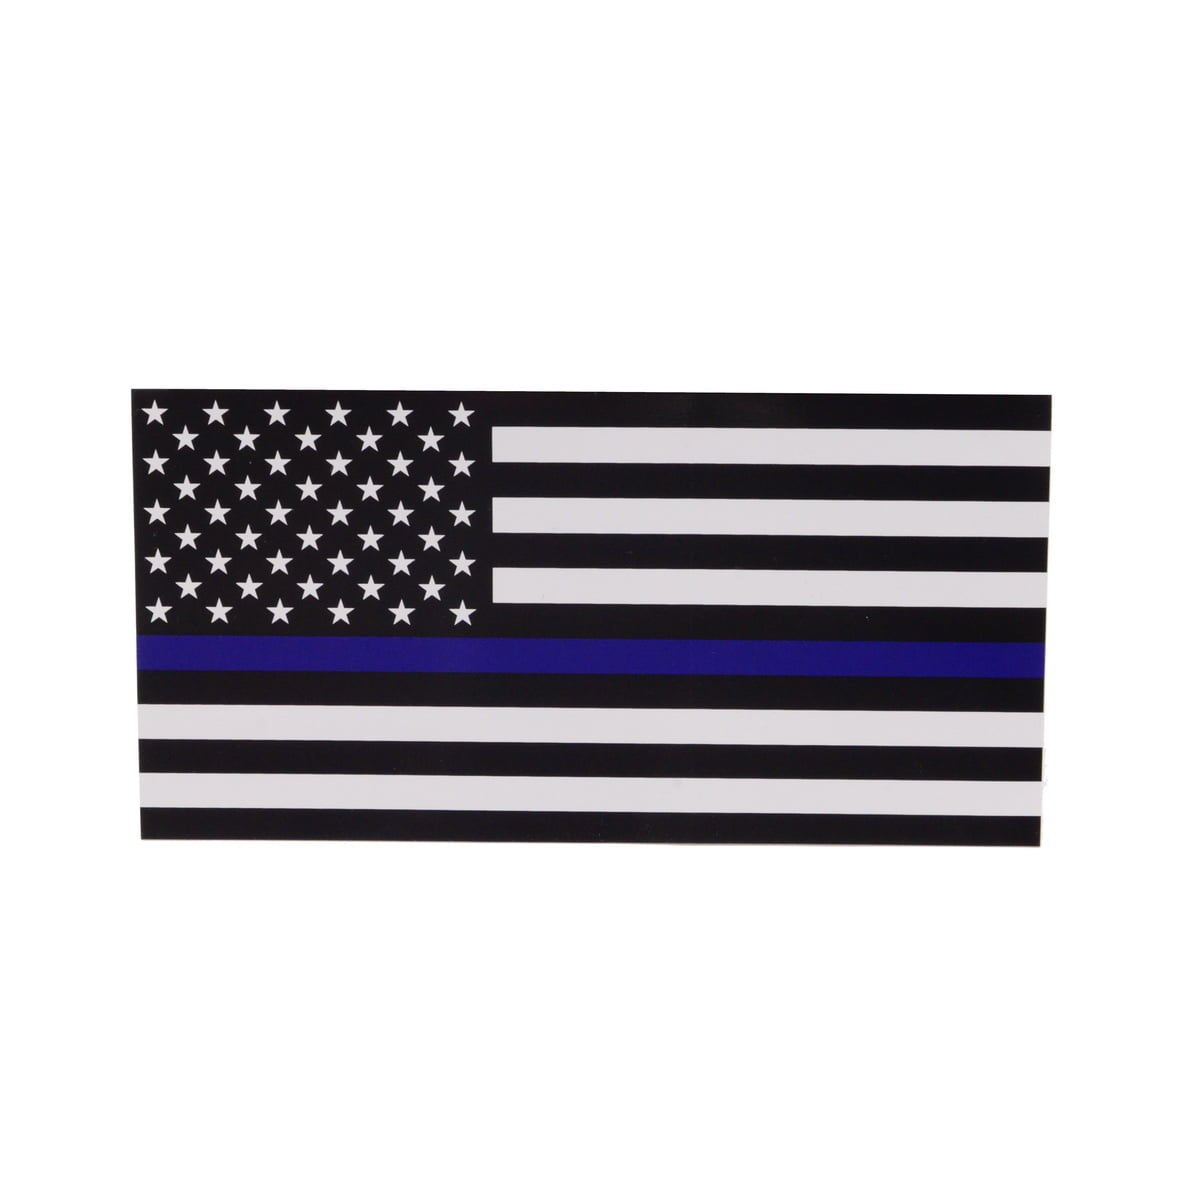 Defend The Police Blue Lives Matter Bumper Sticker Anti BLM Sticker 